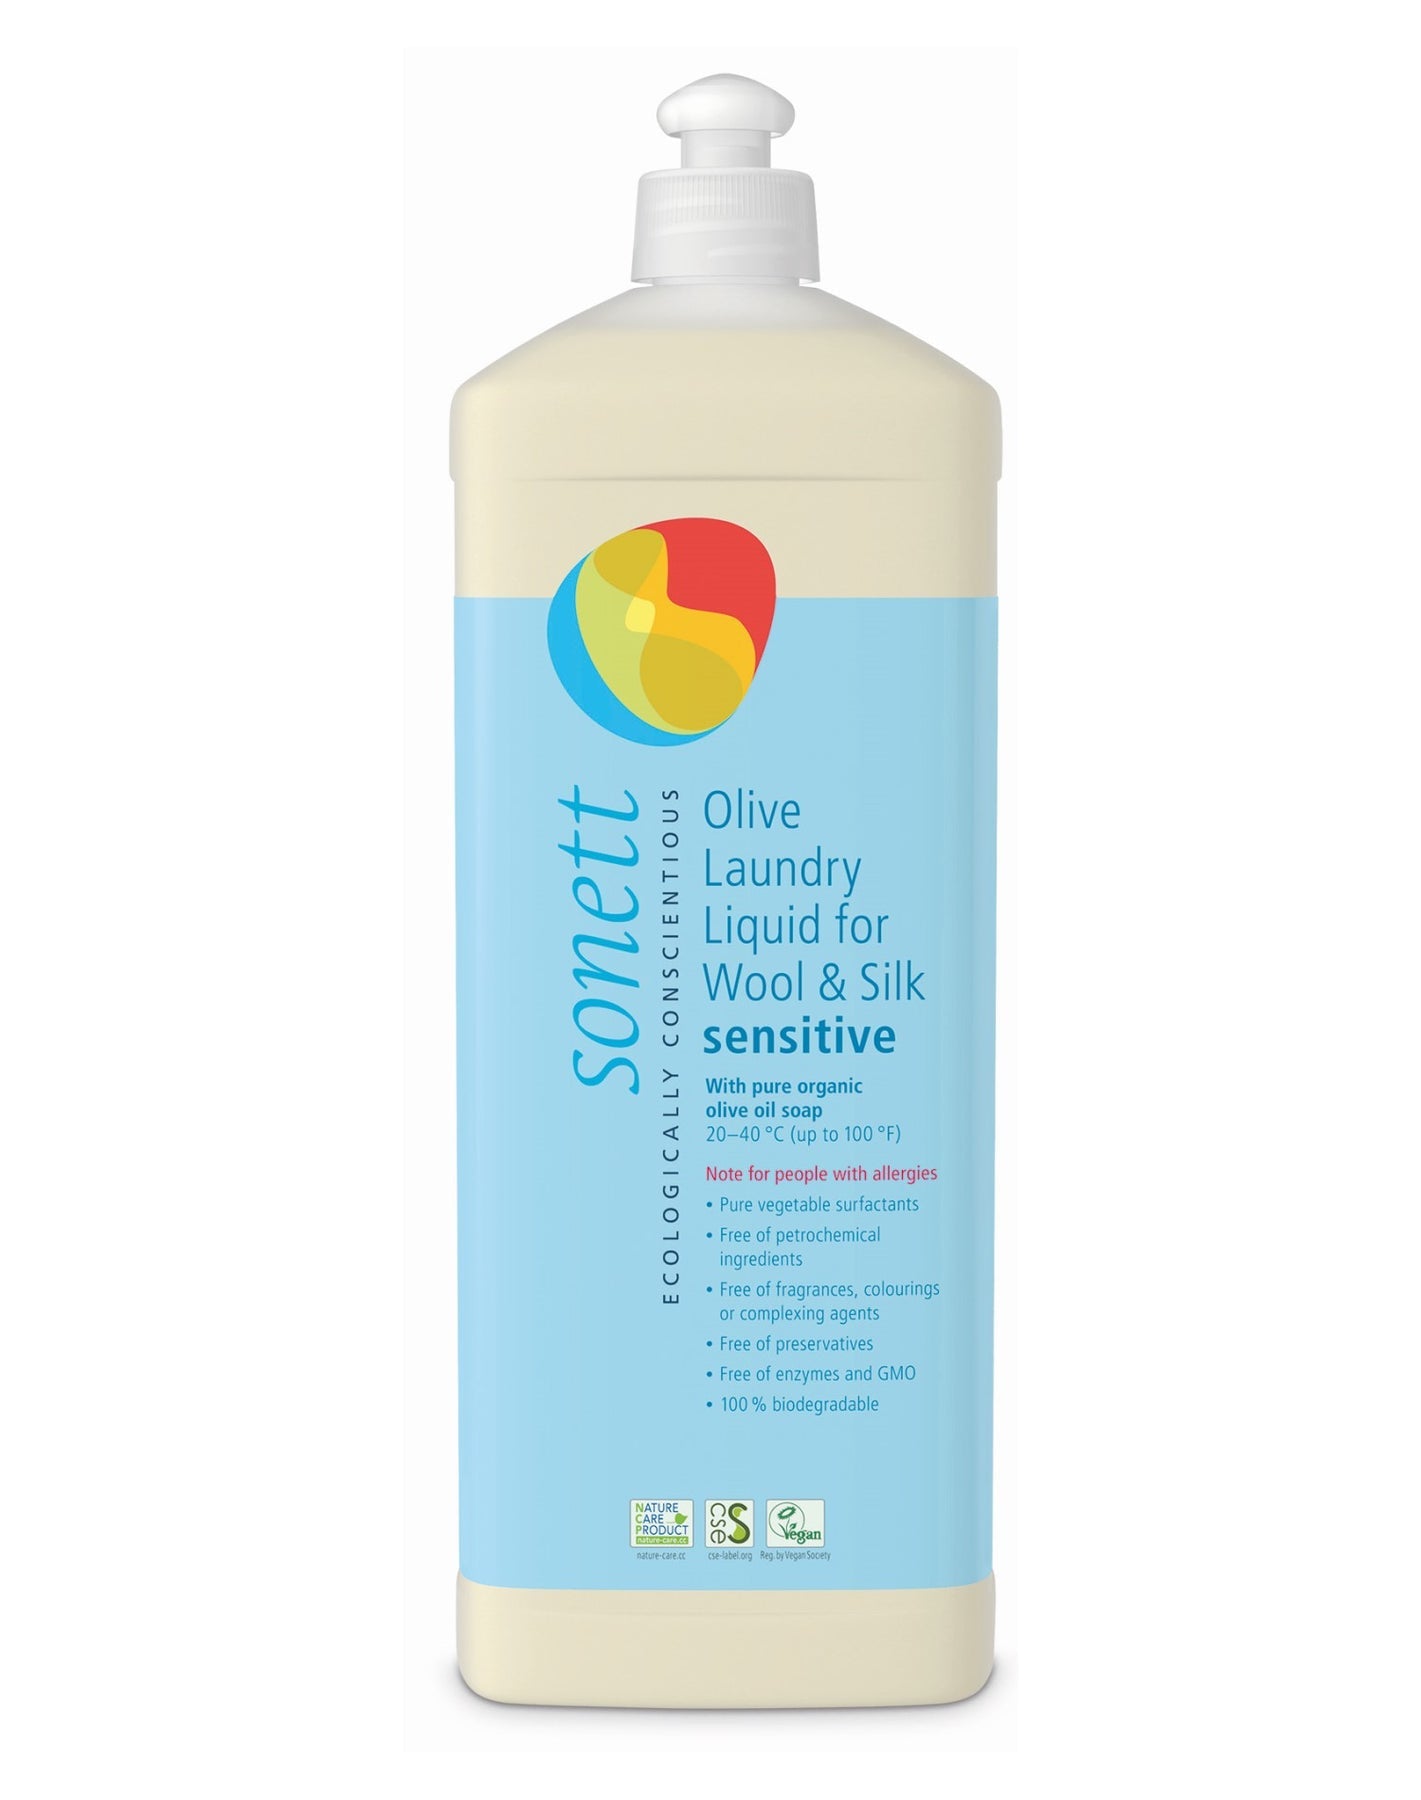 Sonett Olive Laundry Liquid for Wool and Silk Sensitive (35 fl. oz/1L)